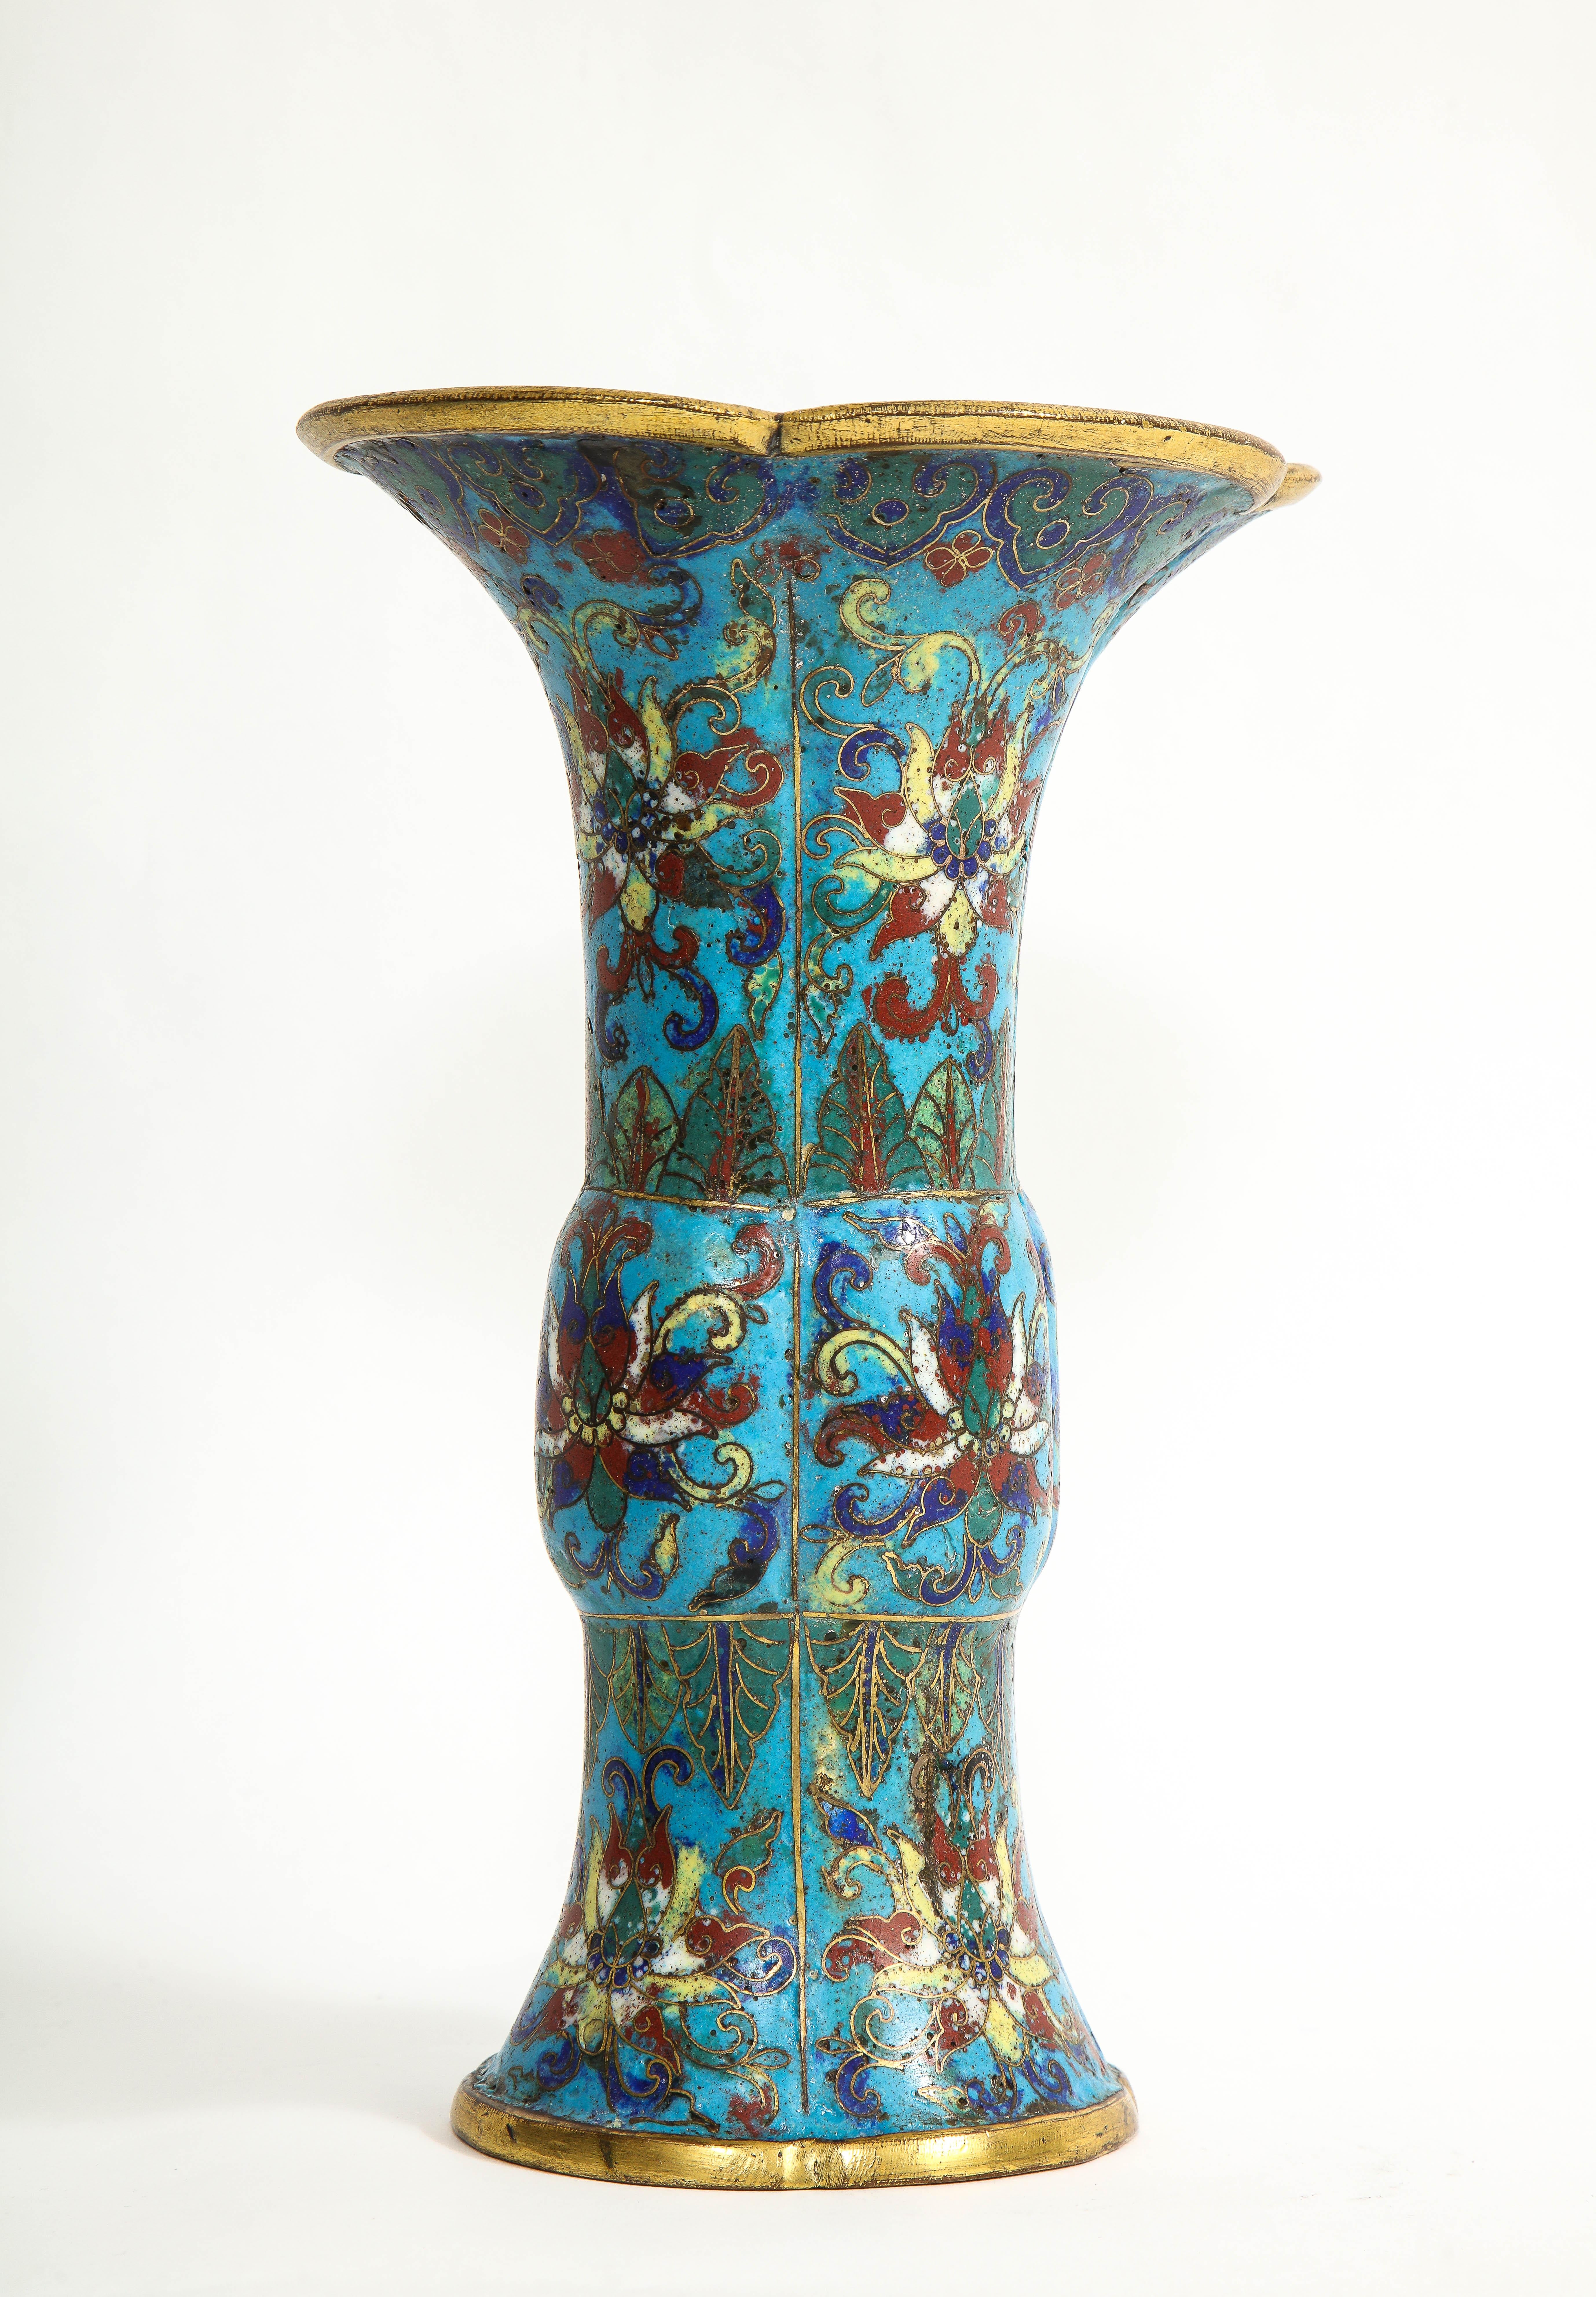 17th Century Antique Chinese Cloisonné Enamel Gu Form Vase, 17th/18th Century, Kangxi Period For Sale